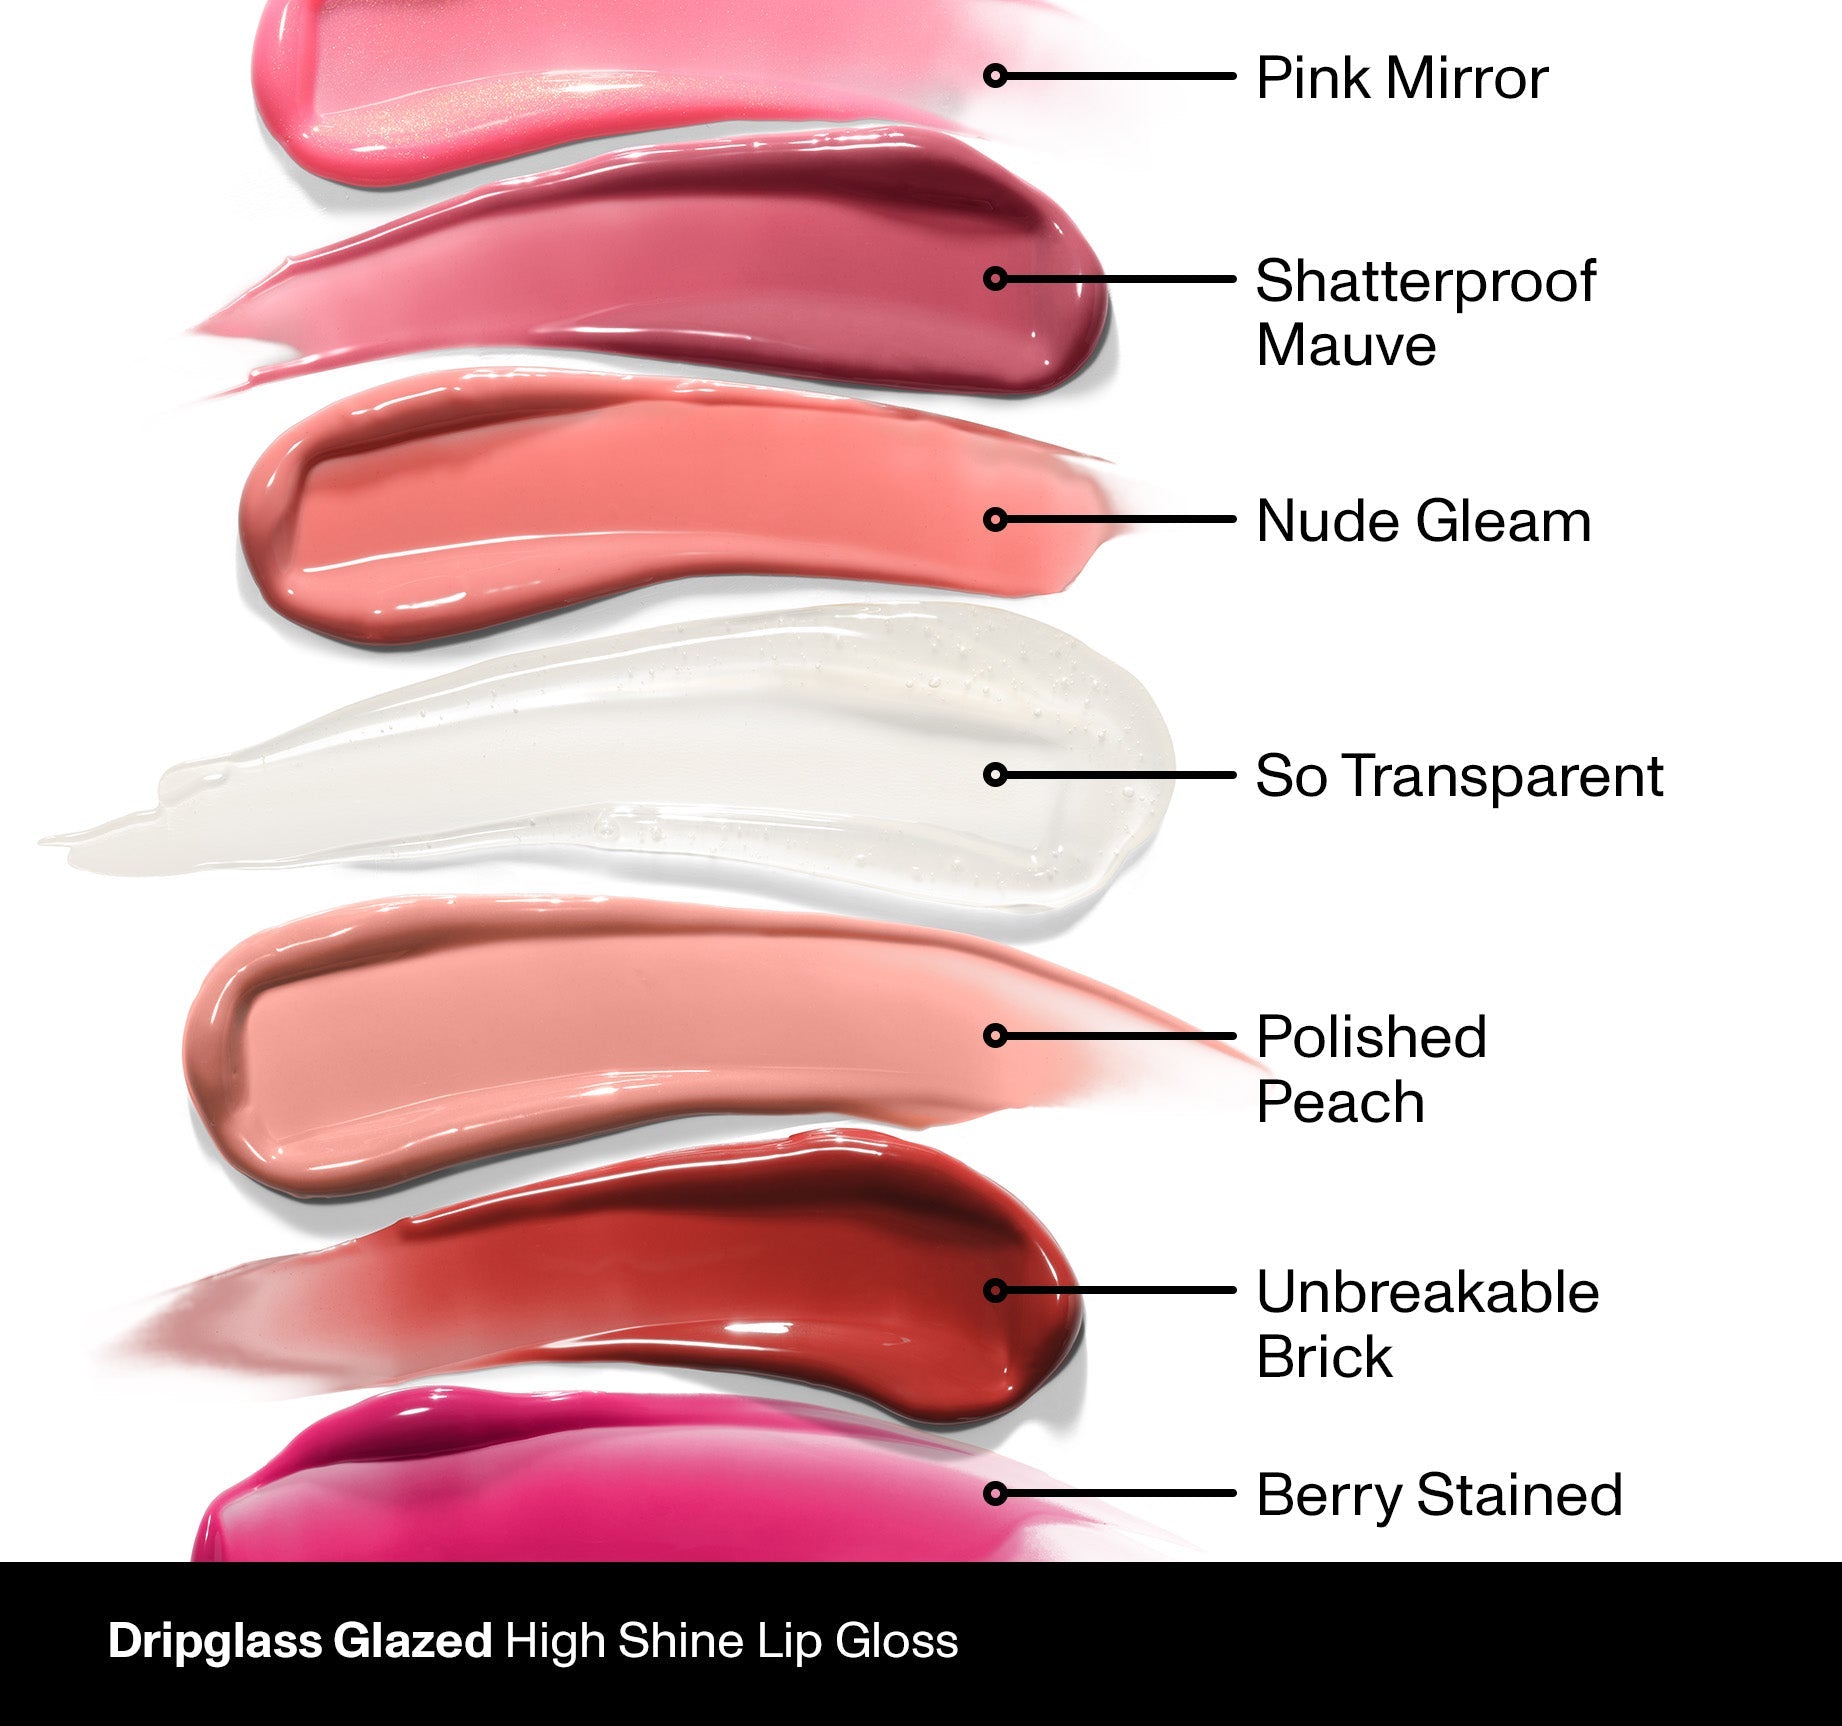 Dripglass Glazed High Shine Lip Gloss - Shatterproof Mauve - Image 6